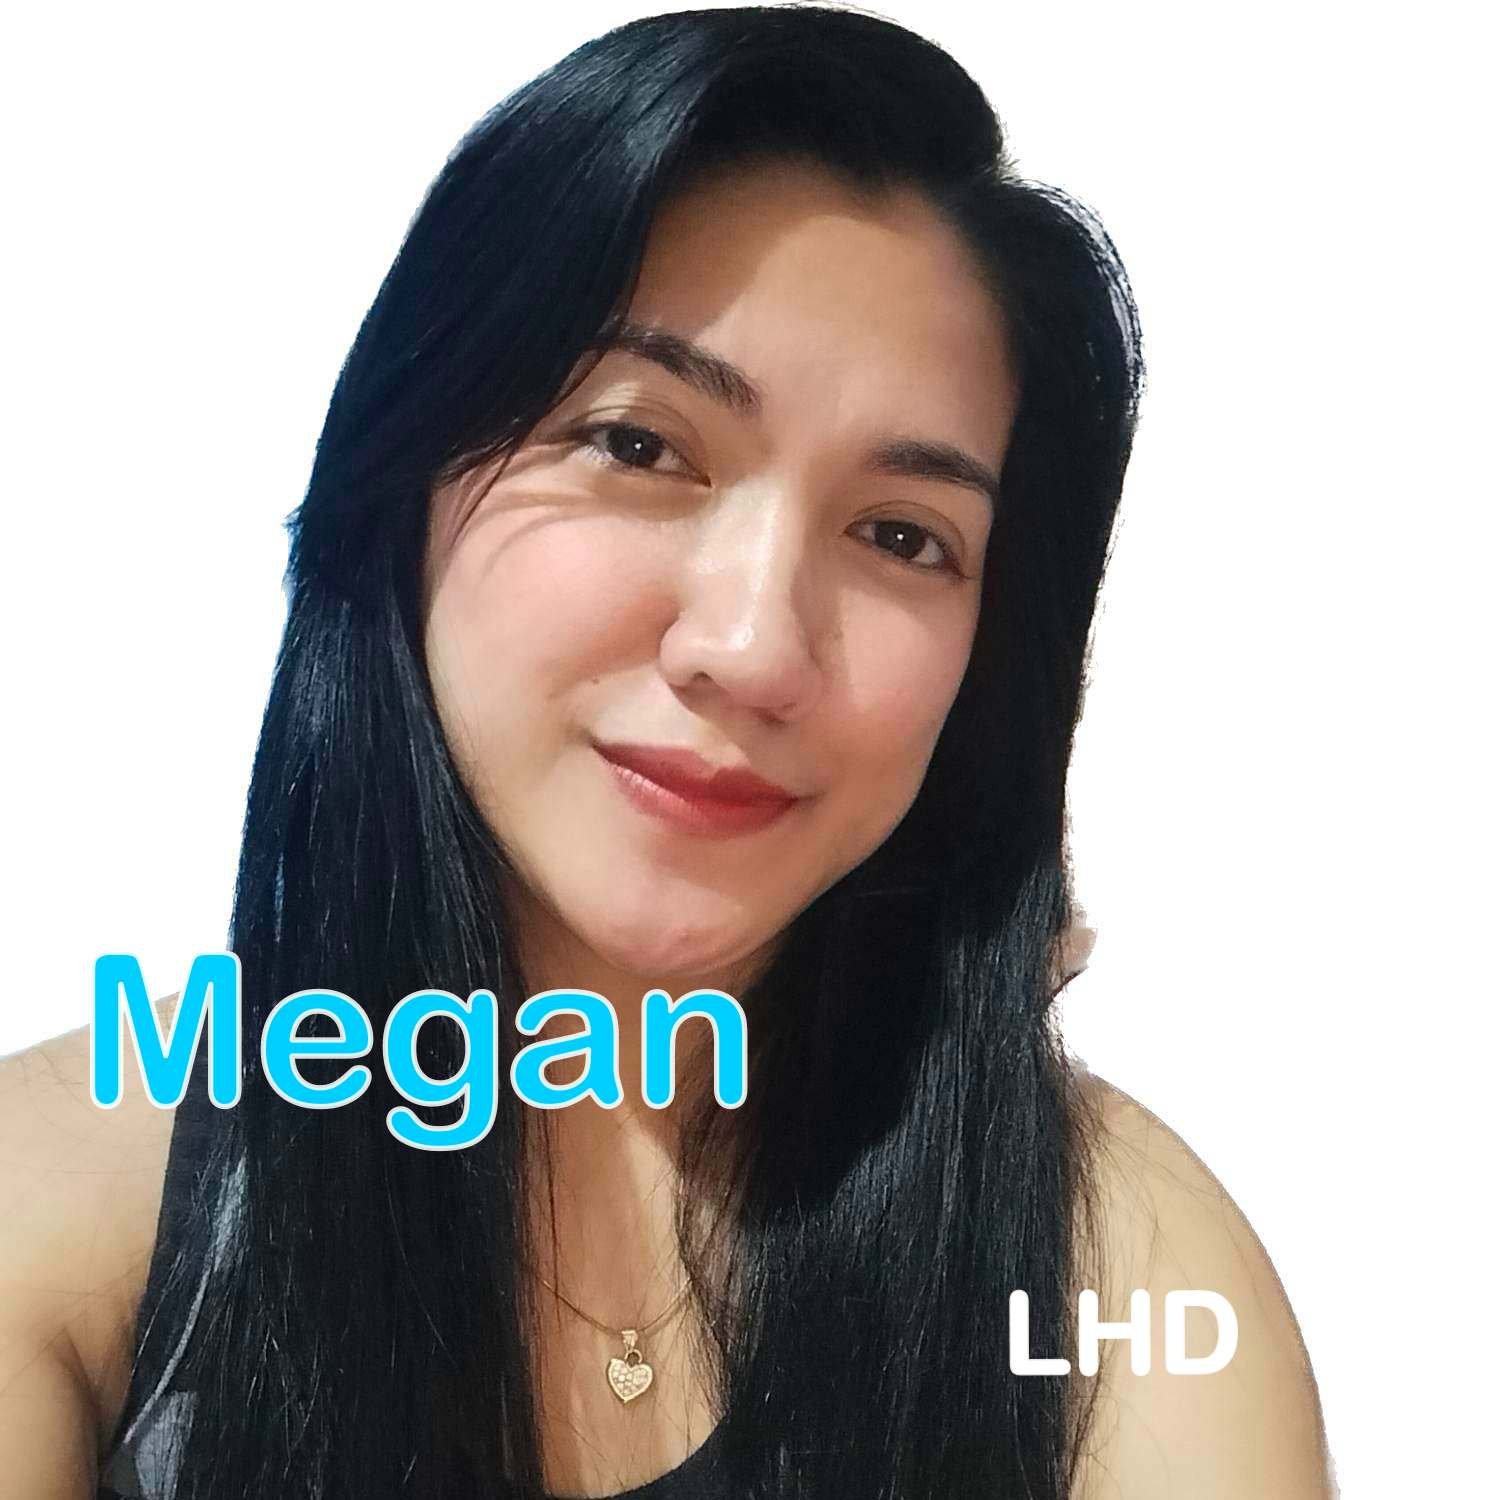 Megan LHD amputee